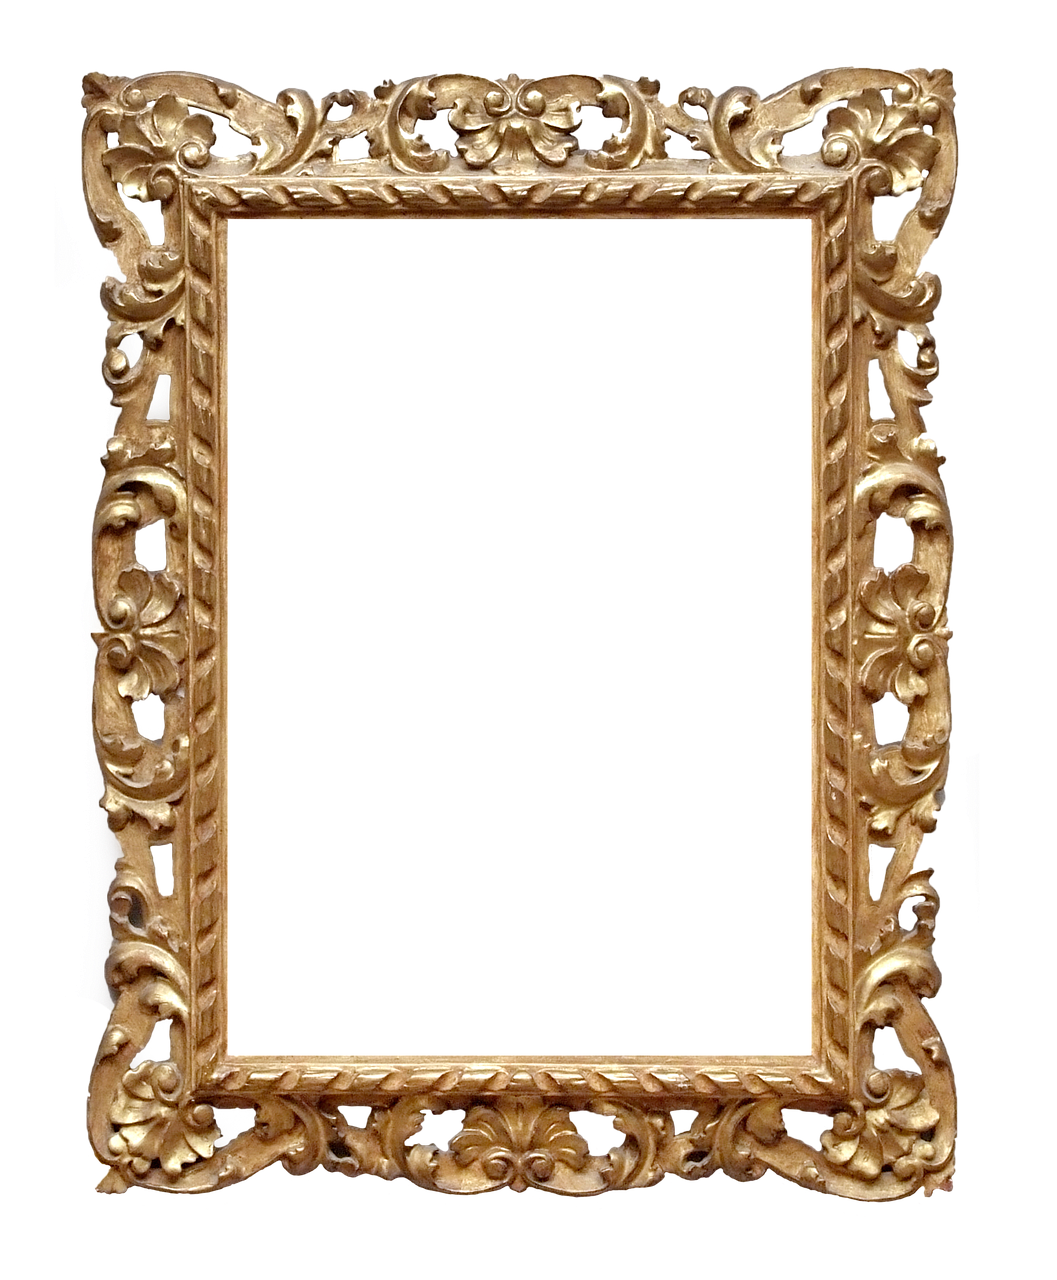 frame ornate gold free photo